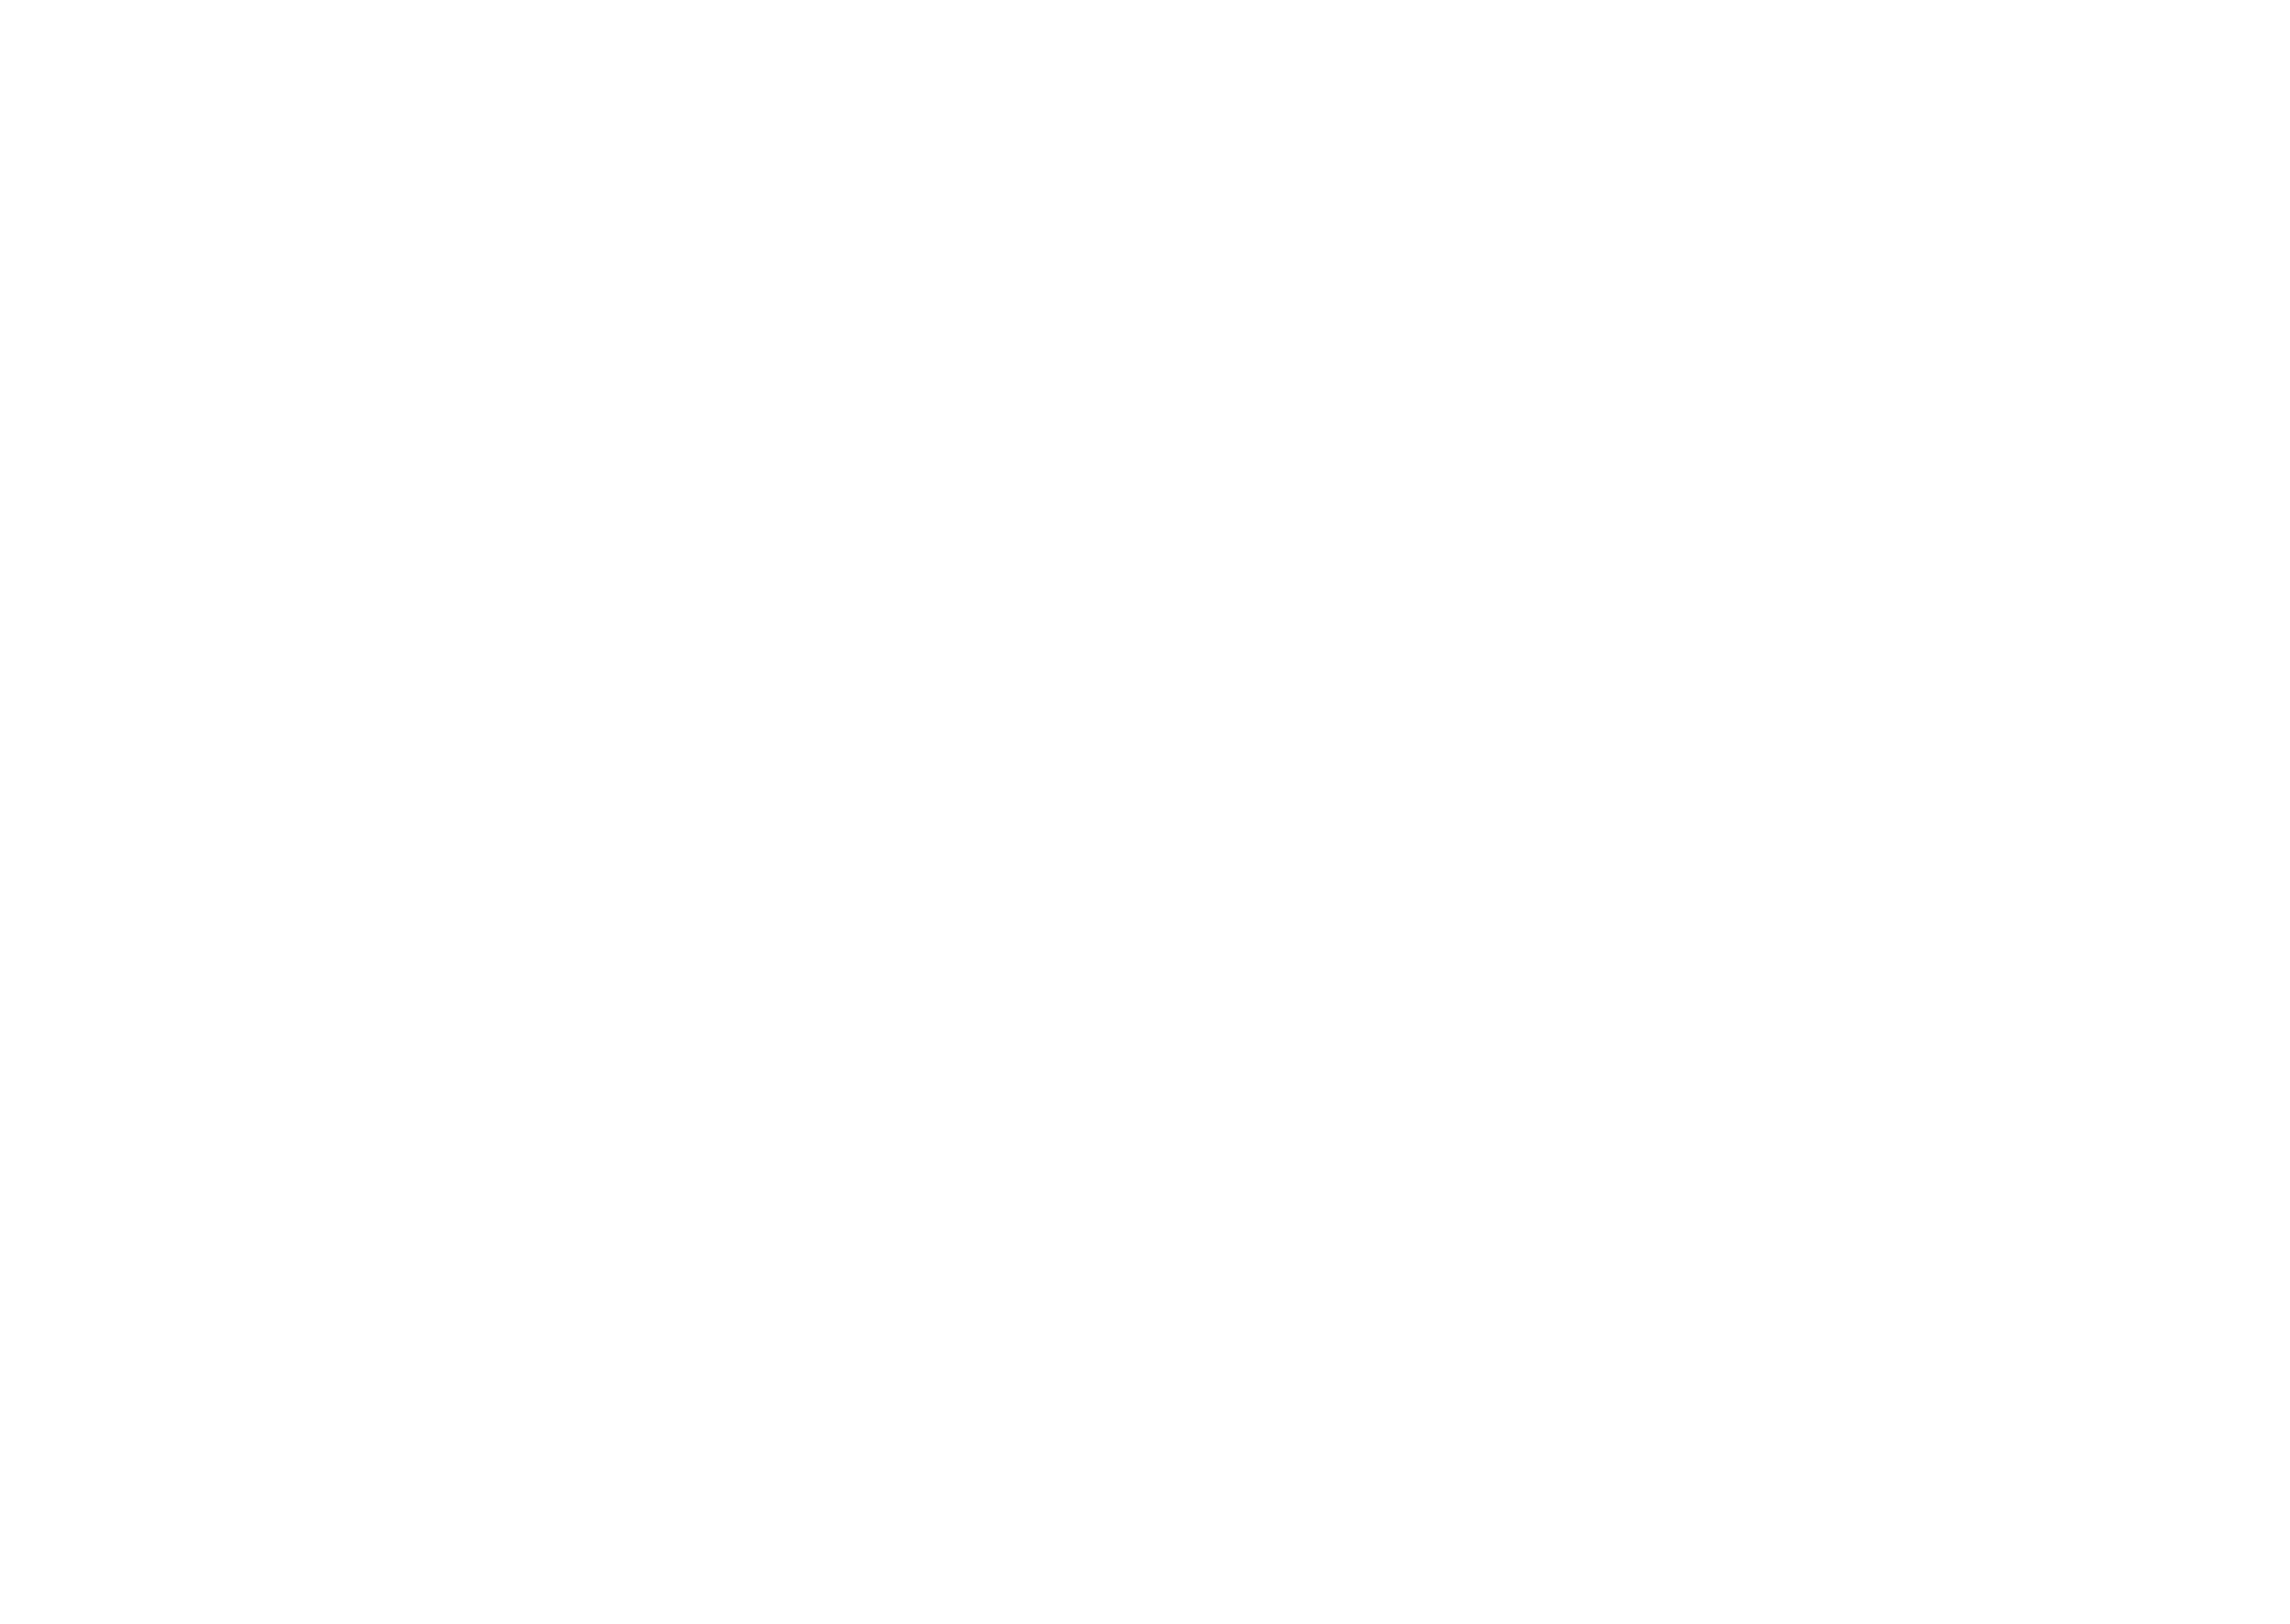 Pathos - fornitura prodotti per parrucchieri ed estetiste